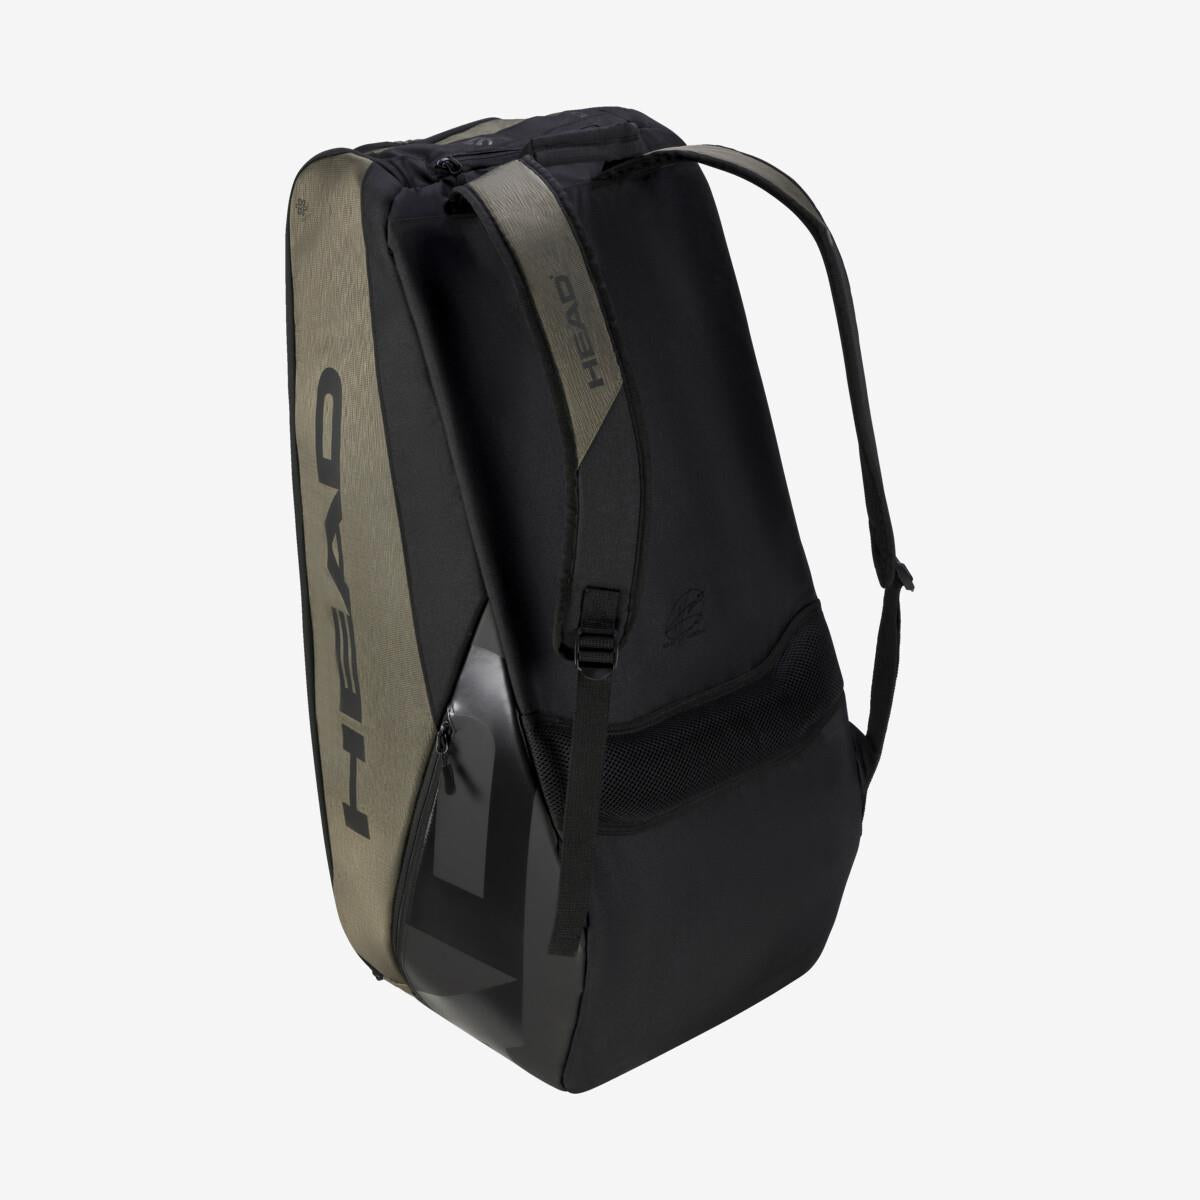 HEAD Pro X Tennis Bag XL - TYBK - Handles